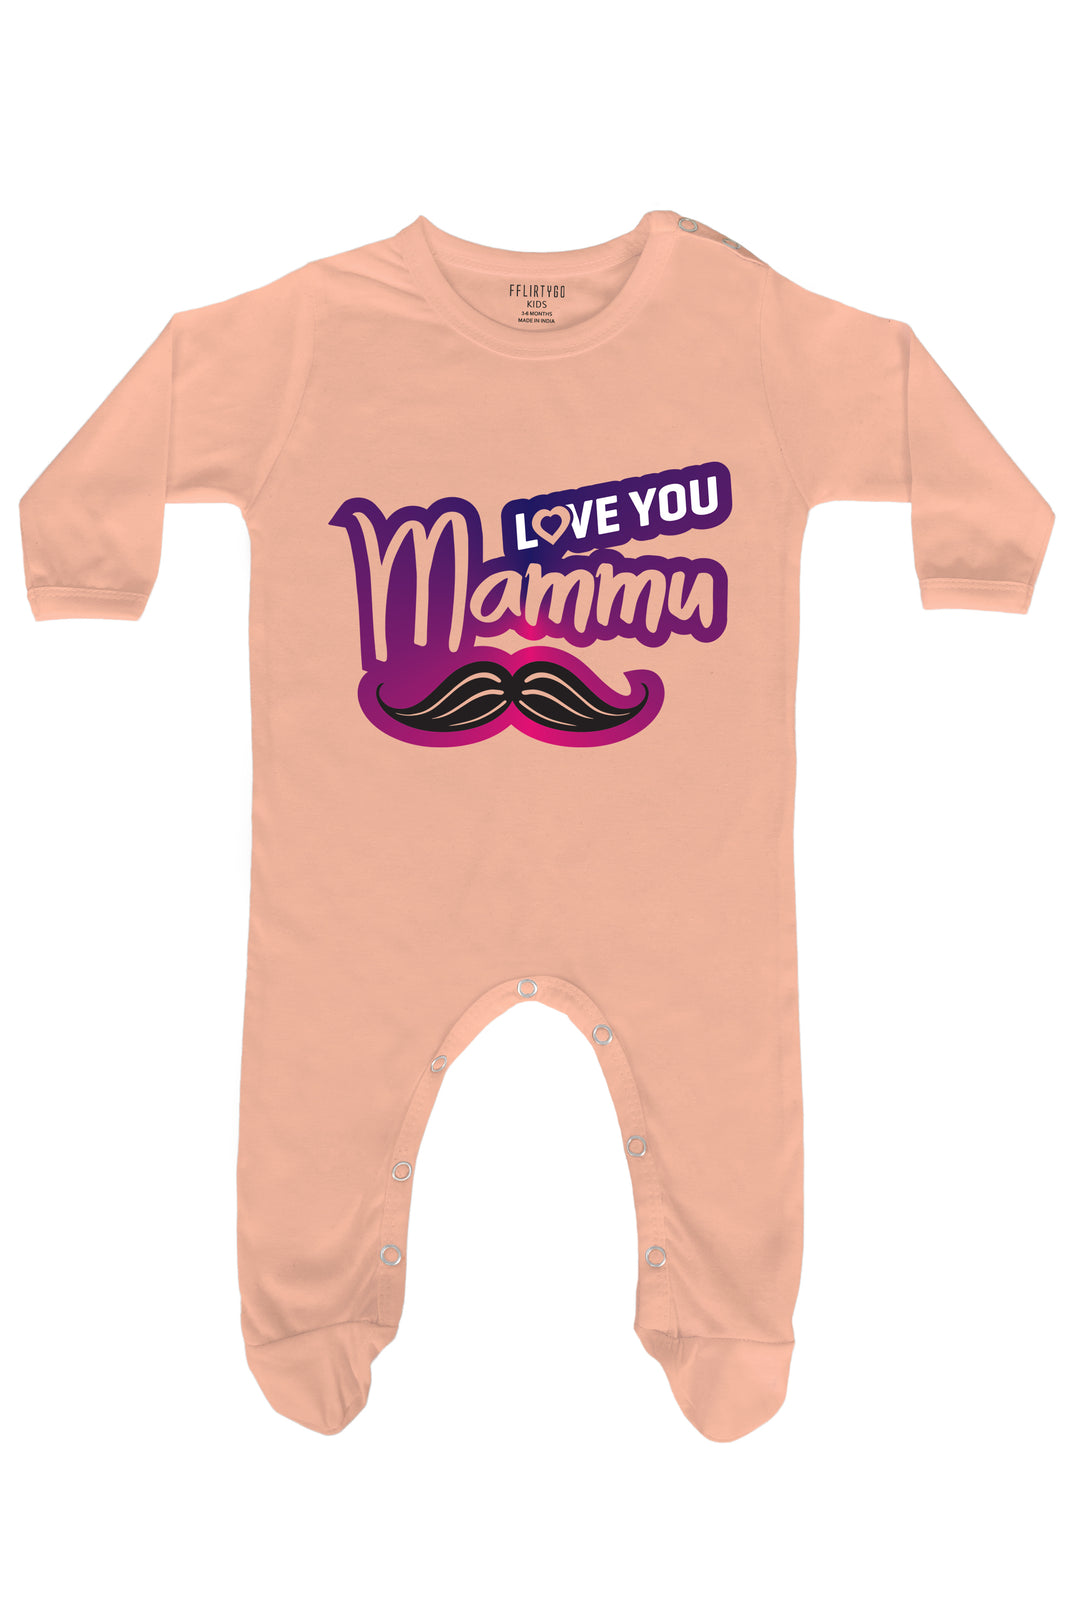 Love You Mammu Baby Romper | Onesies